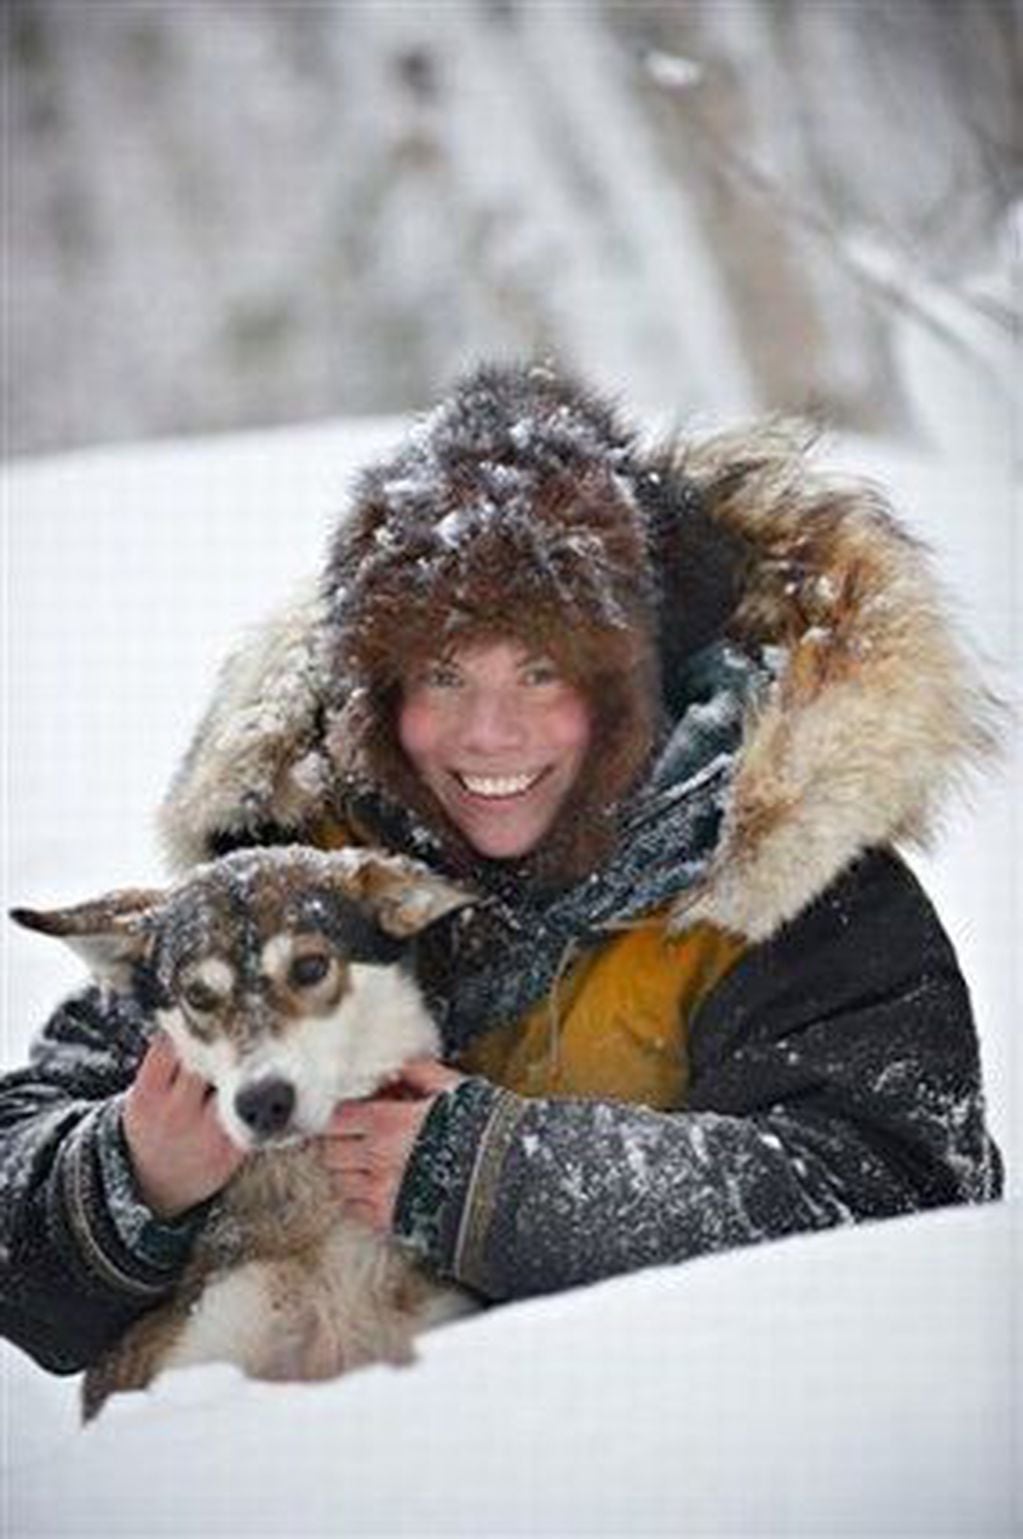 Sigrid Ekran, musher noruega referente a nivel mundial